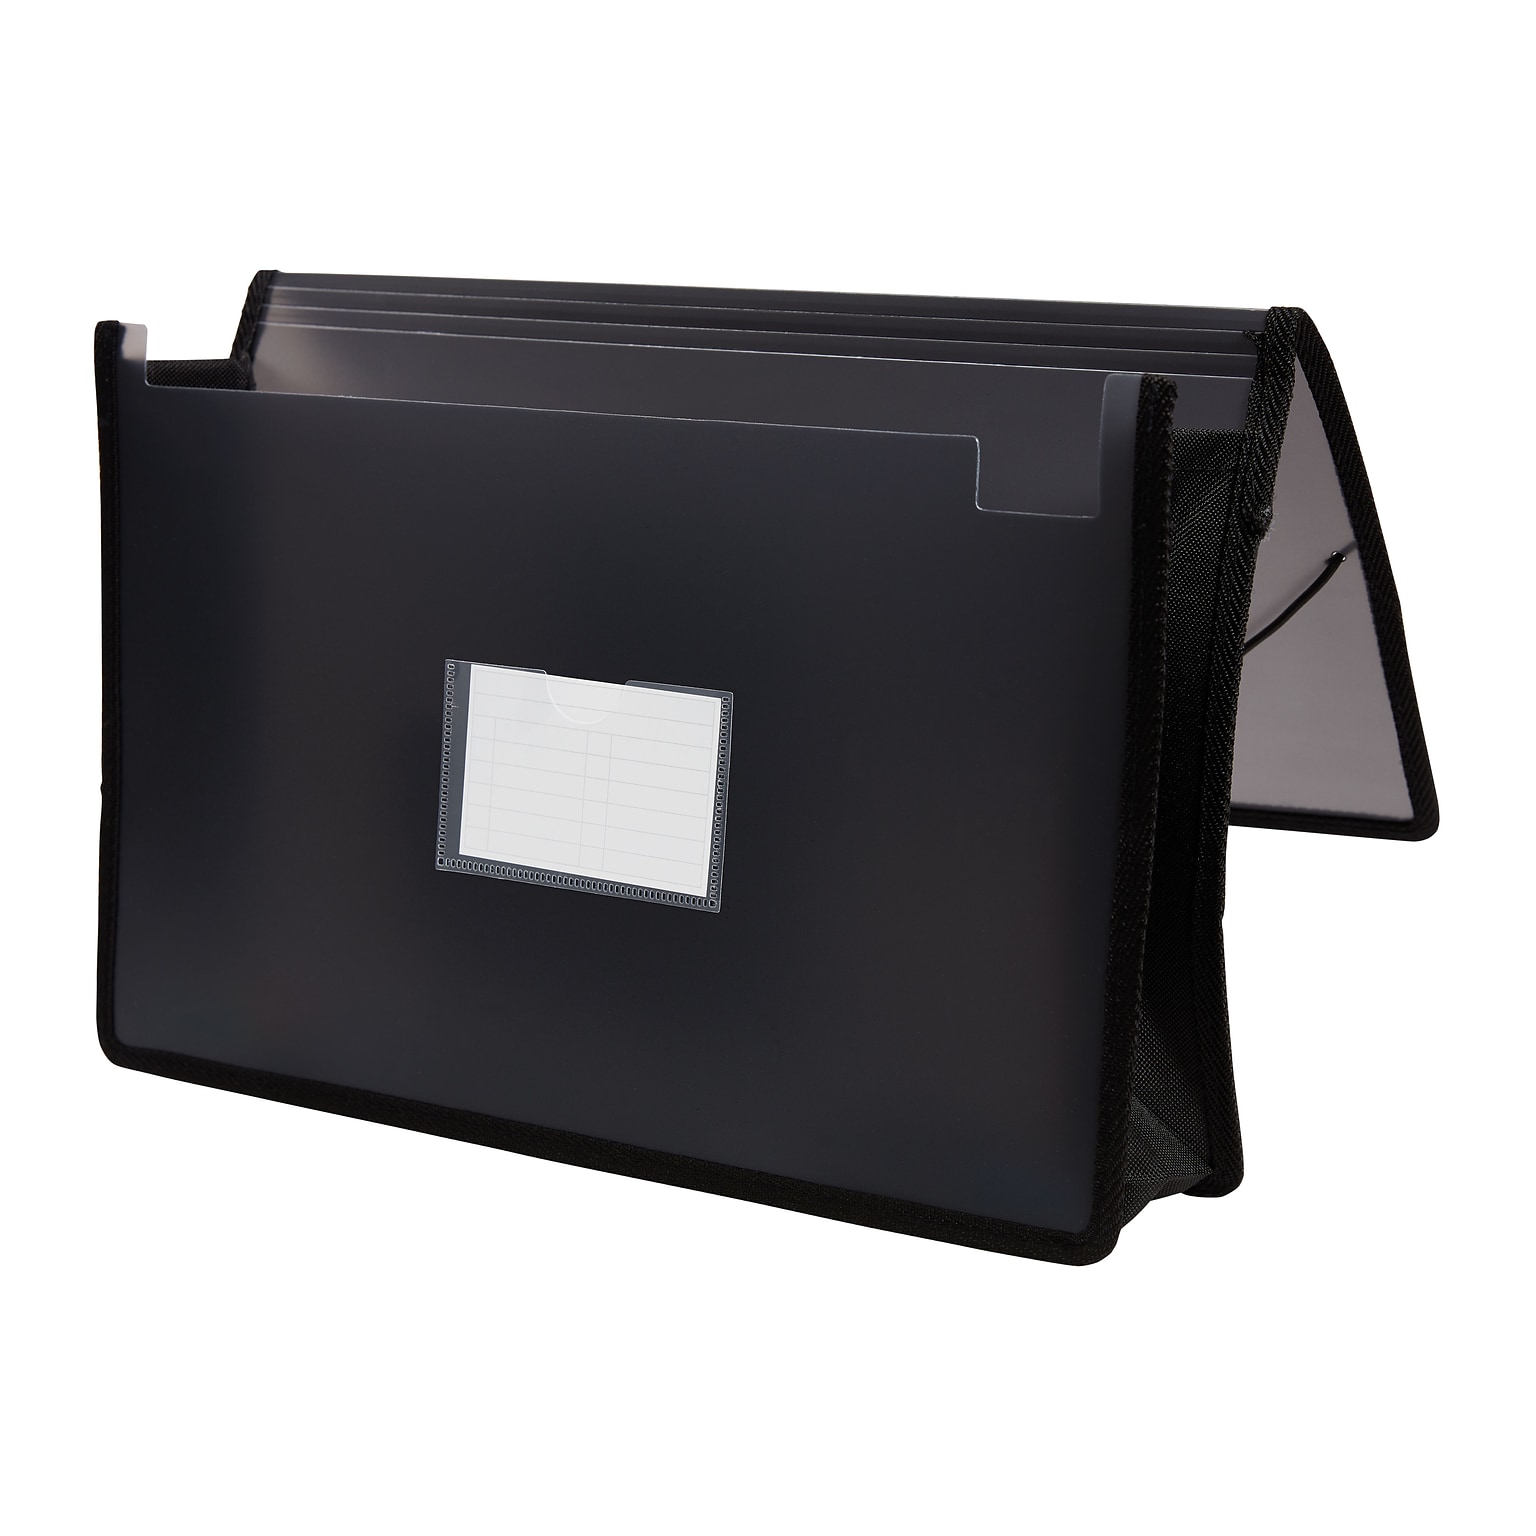 TRU RED 3.5 Expanding Wallet, Elastic Closure, Legal Size, Black (TR10761)